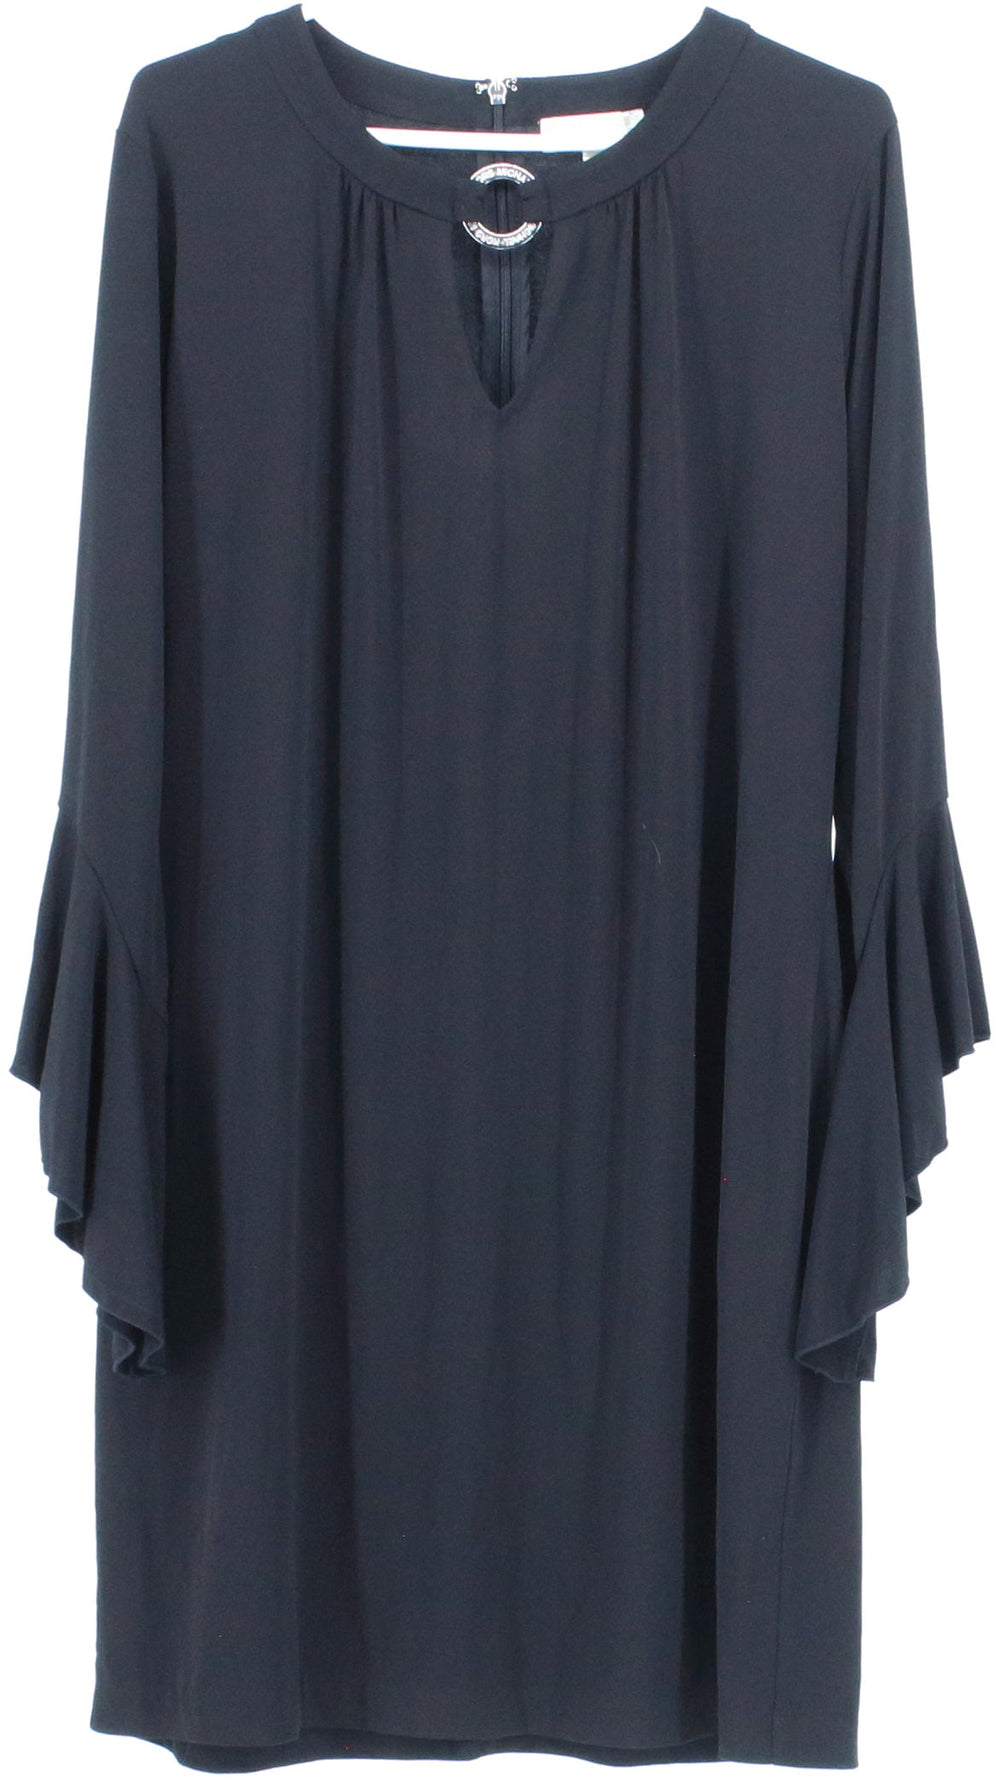 Michael Kors Black Long Sleeve Dress